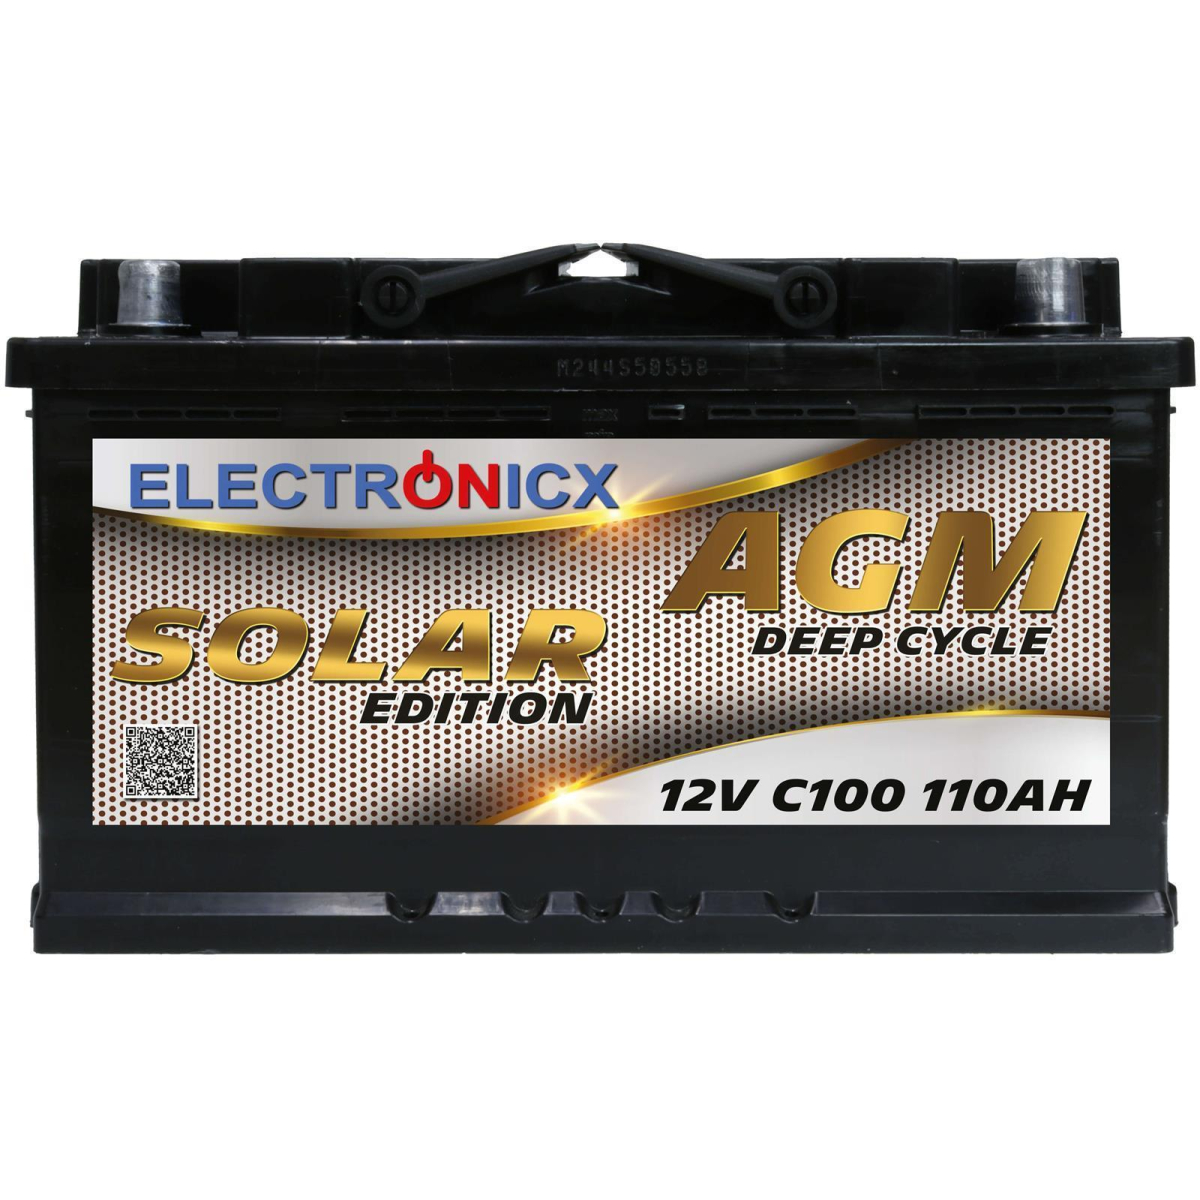 Solarbatterie 12V 110AH Electronicx Solar Edition AGM Batterie Solar Akku Versorgungsbatterie stromspeicher photovoltaik Camping Solaranlage Gartenh